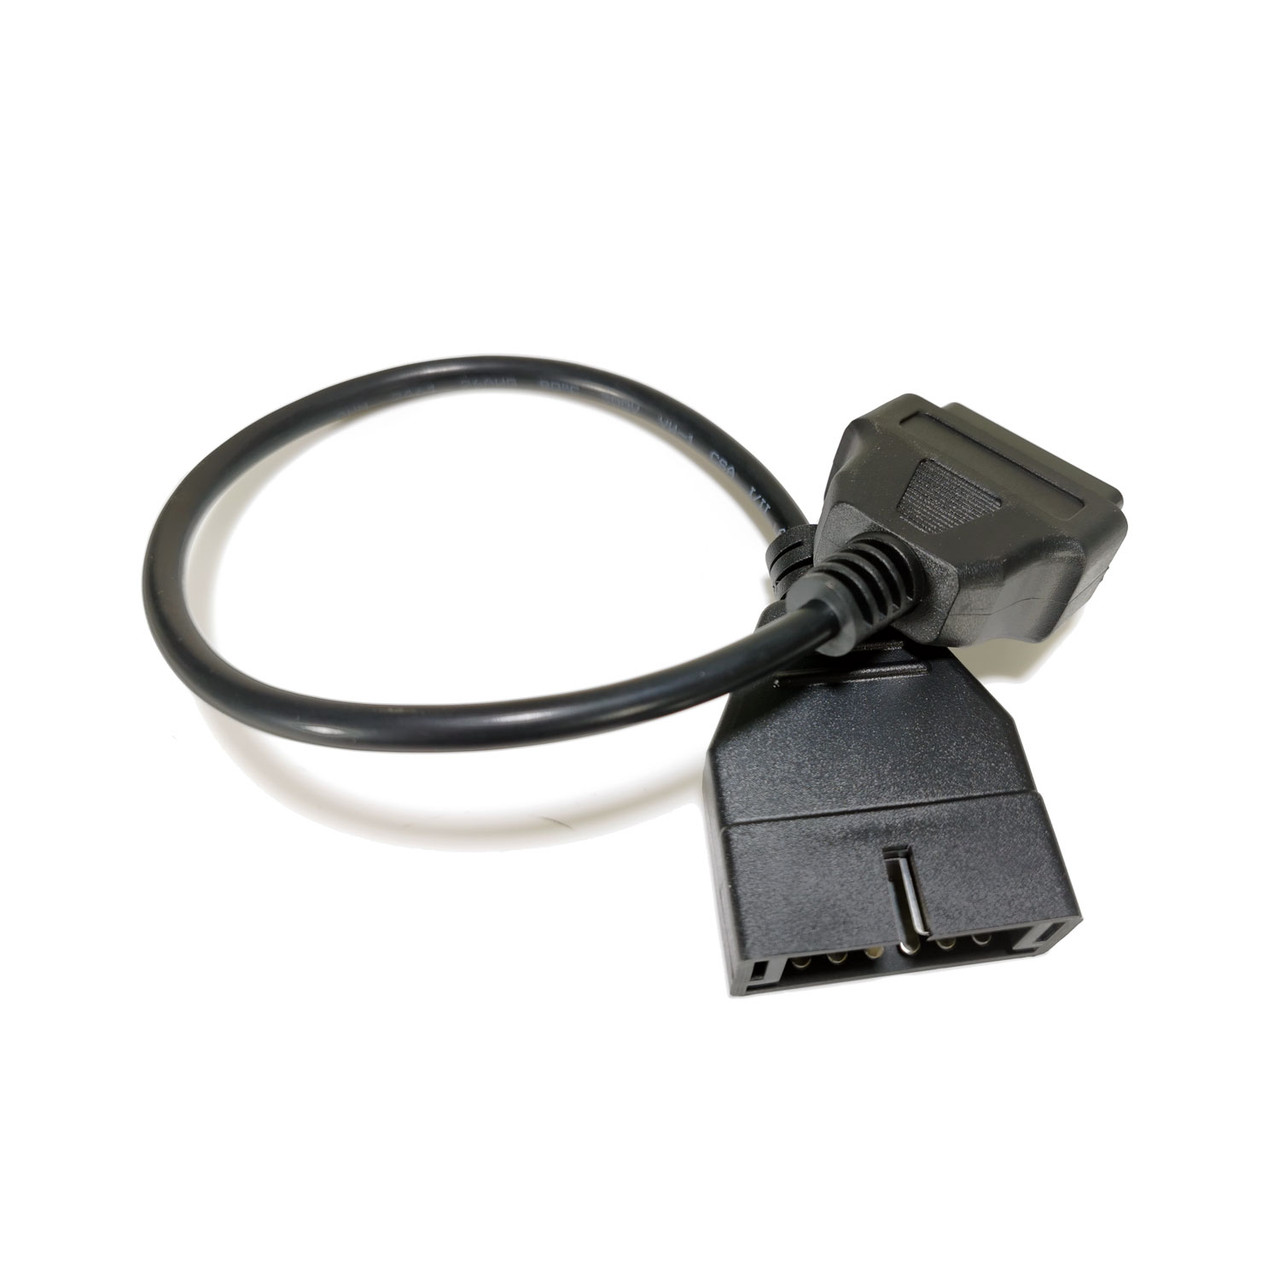 OBD1 Male to OBD2 16 Pin Female Connector Adapter Cable Diagnostic